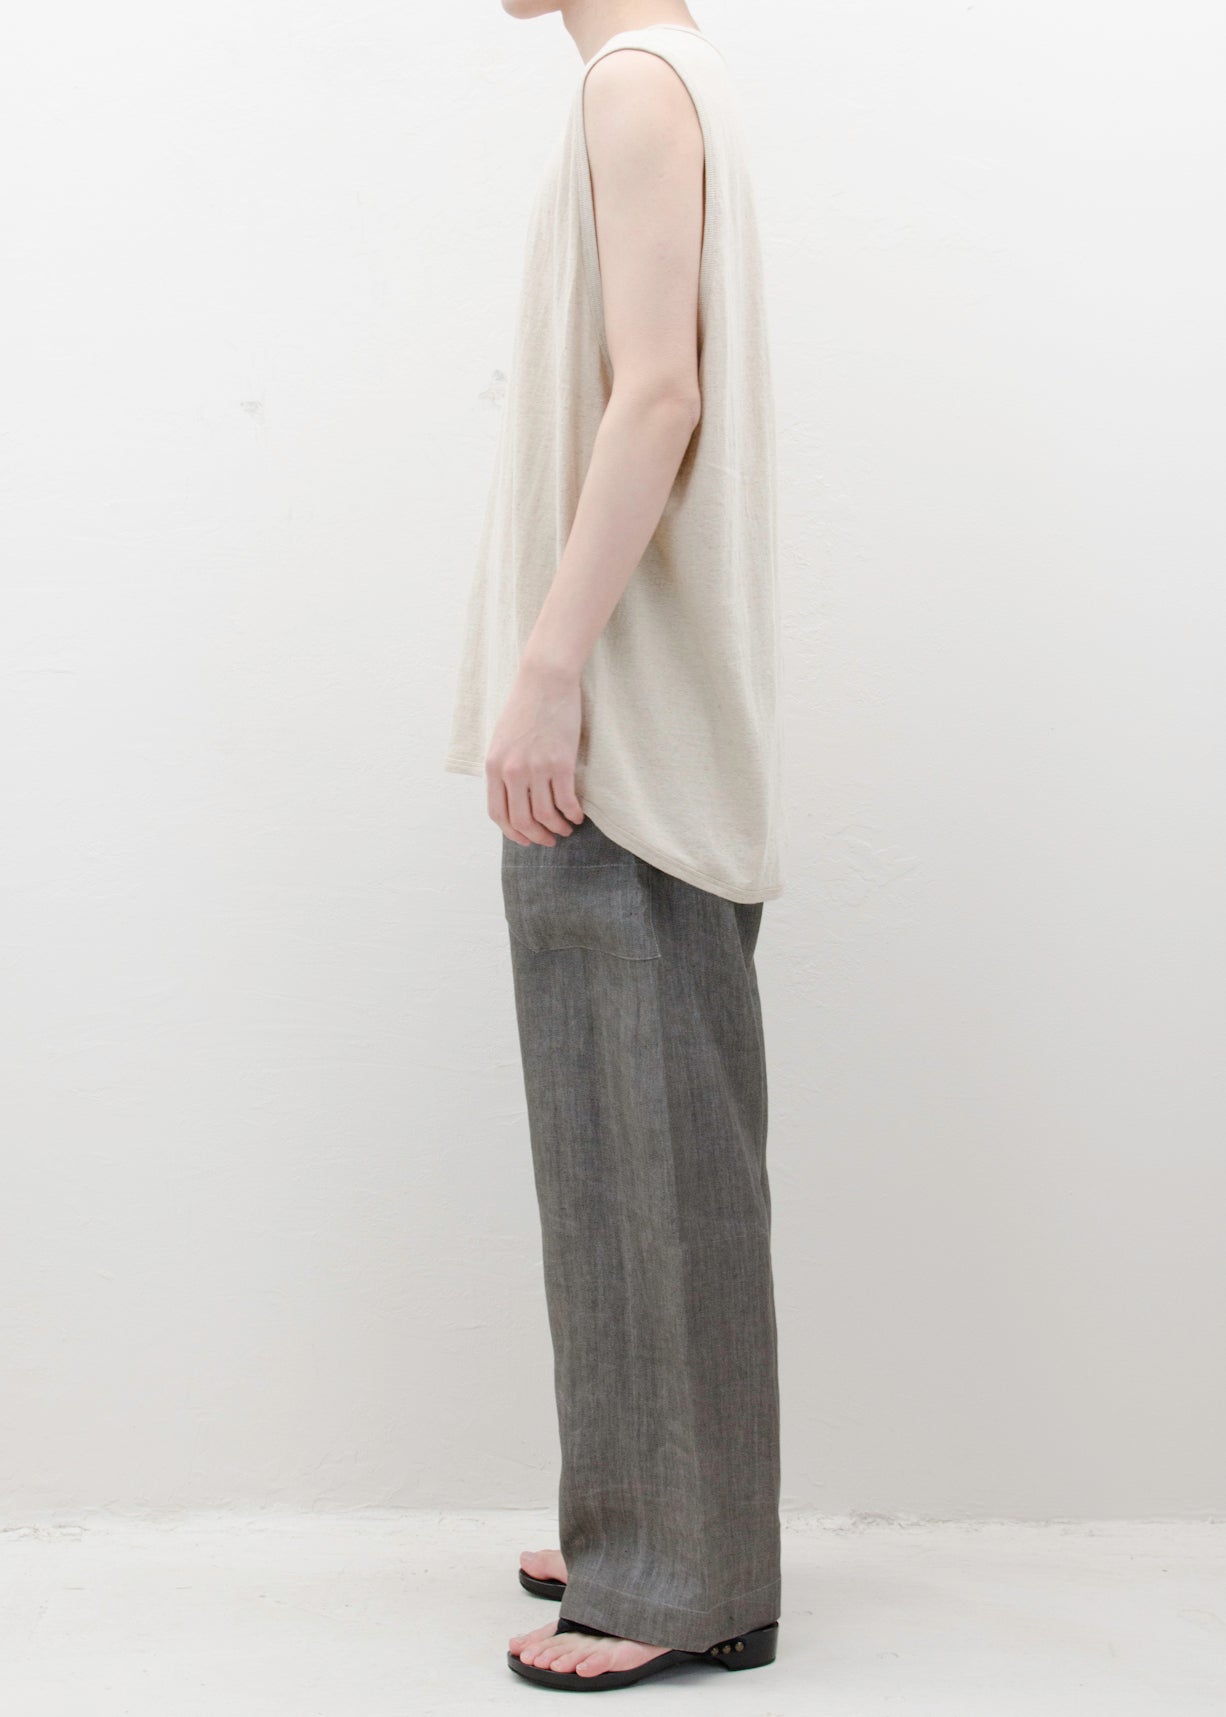 JAN-JAN VAN ESSCHE“裤子#67”SUMI 亚麻斜纹布